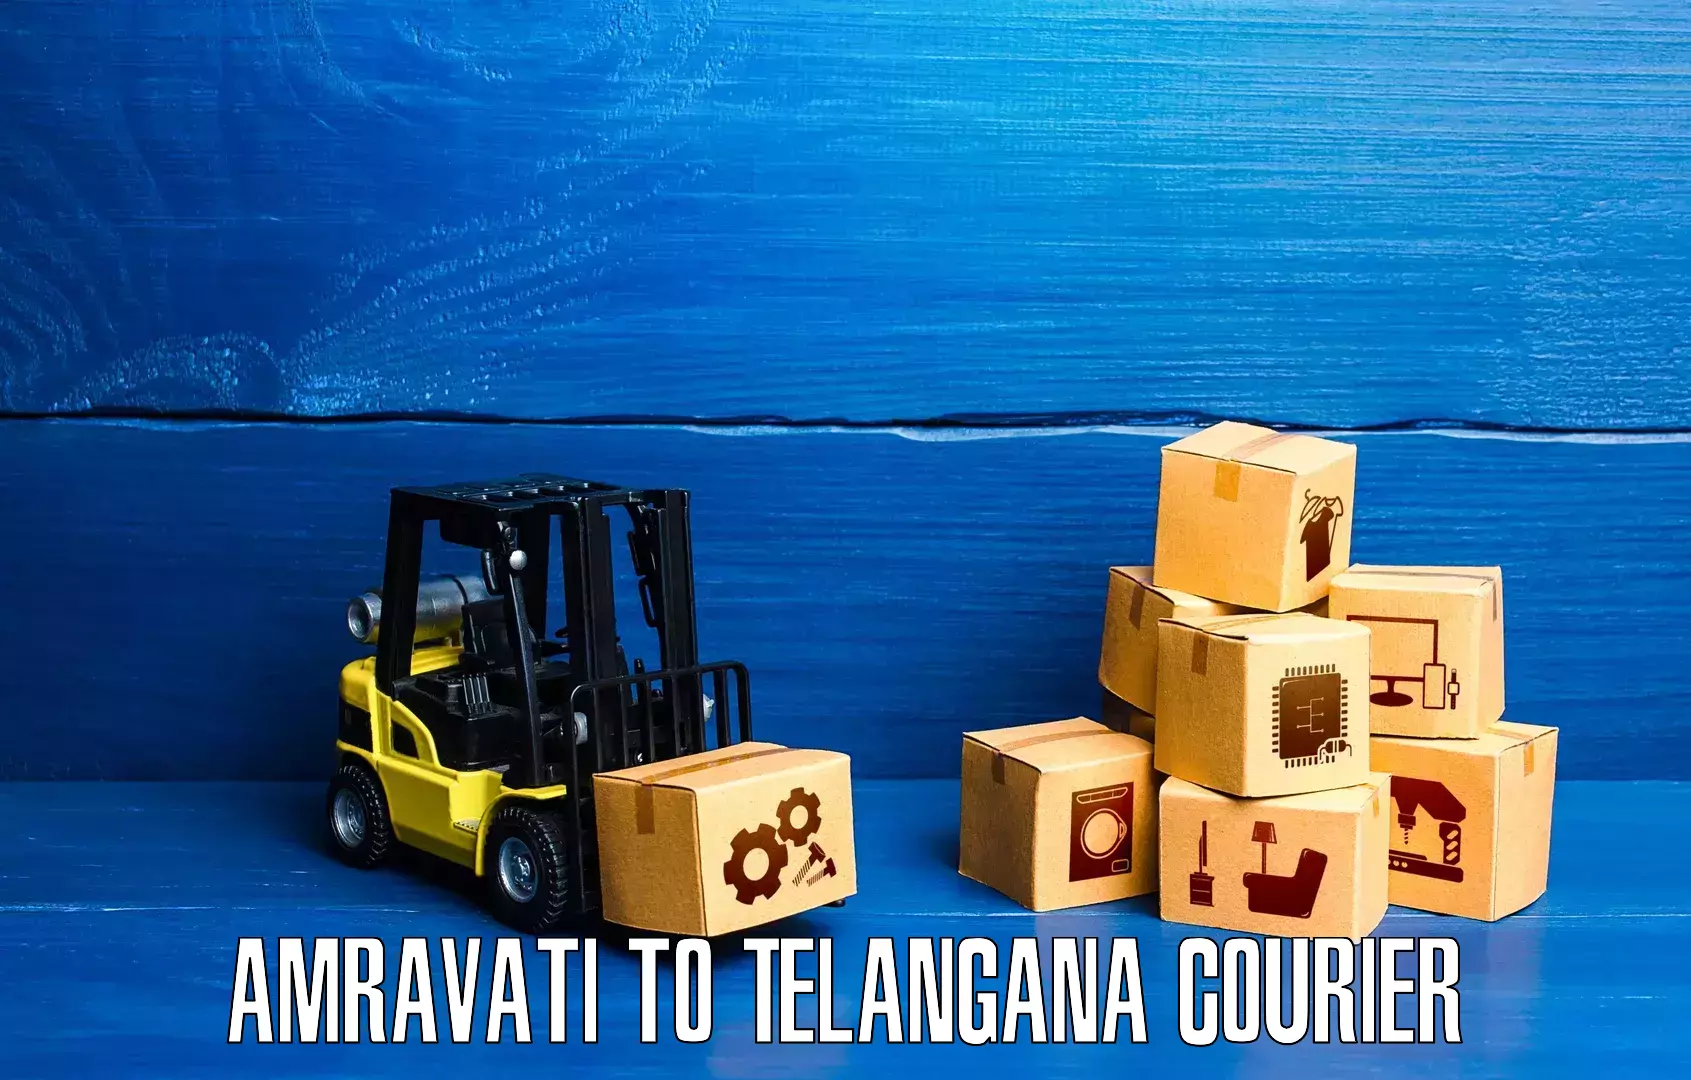 Courier service innovation Amravati to Devarakonda